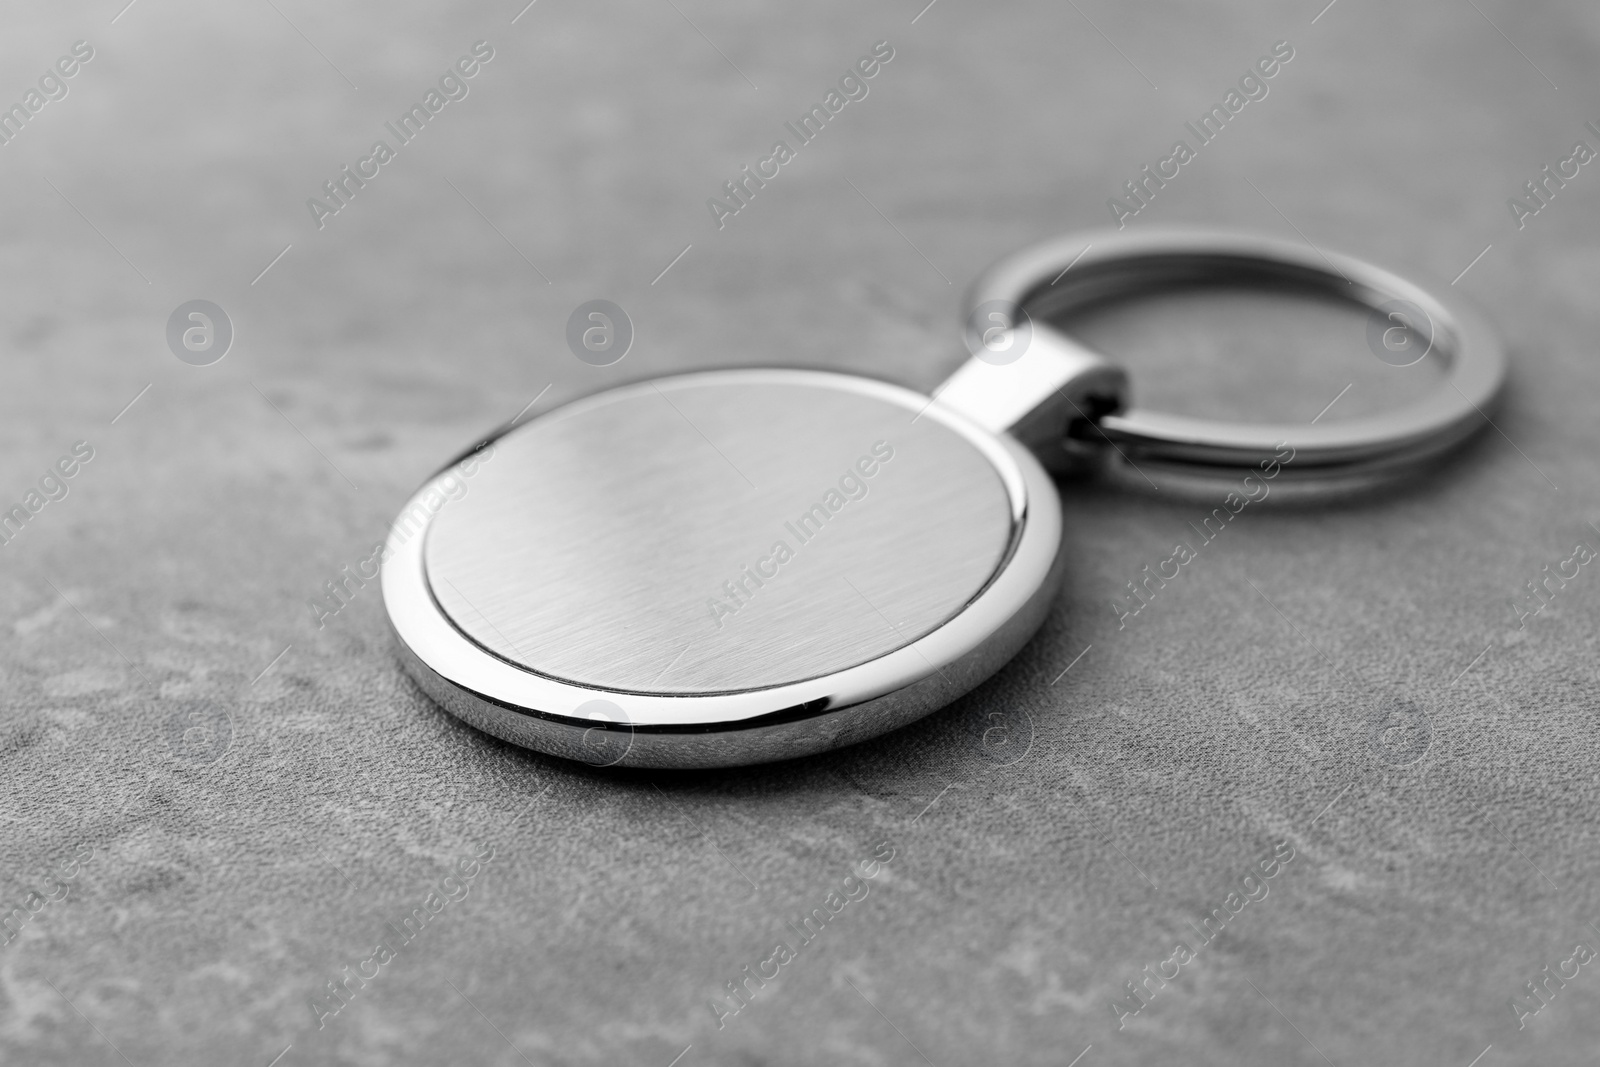 Photo of Metallic keychain on grey background, closeup view